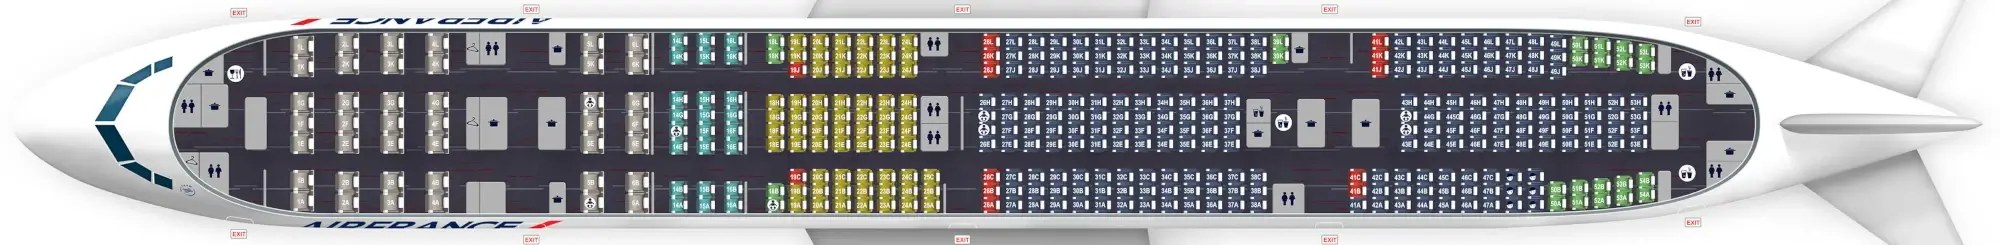 Plan Cabine Boeing 777-300er Air France